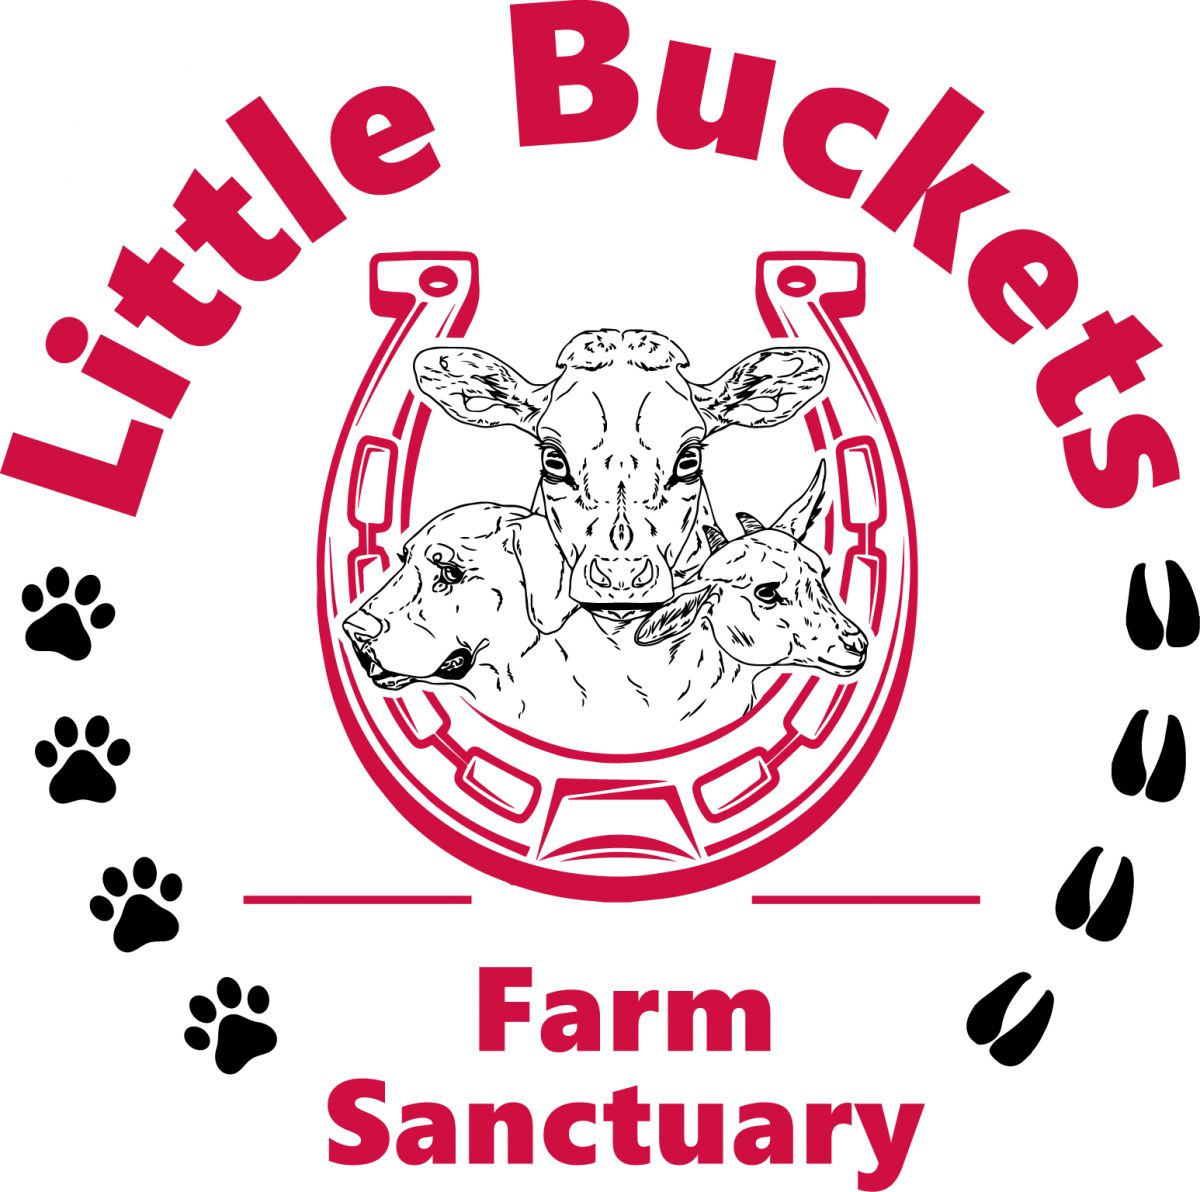 Little Buckets Farm Sanctuary